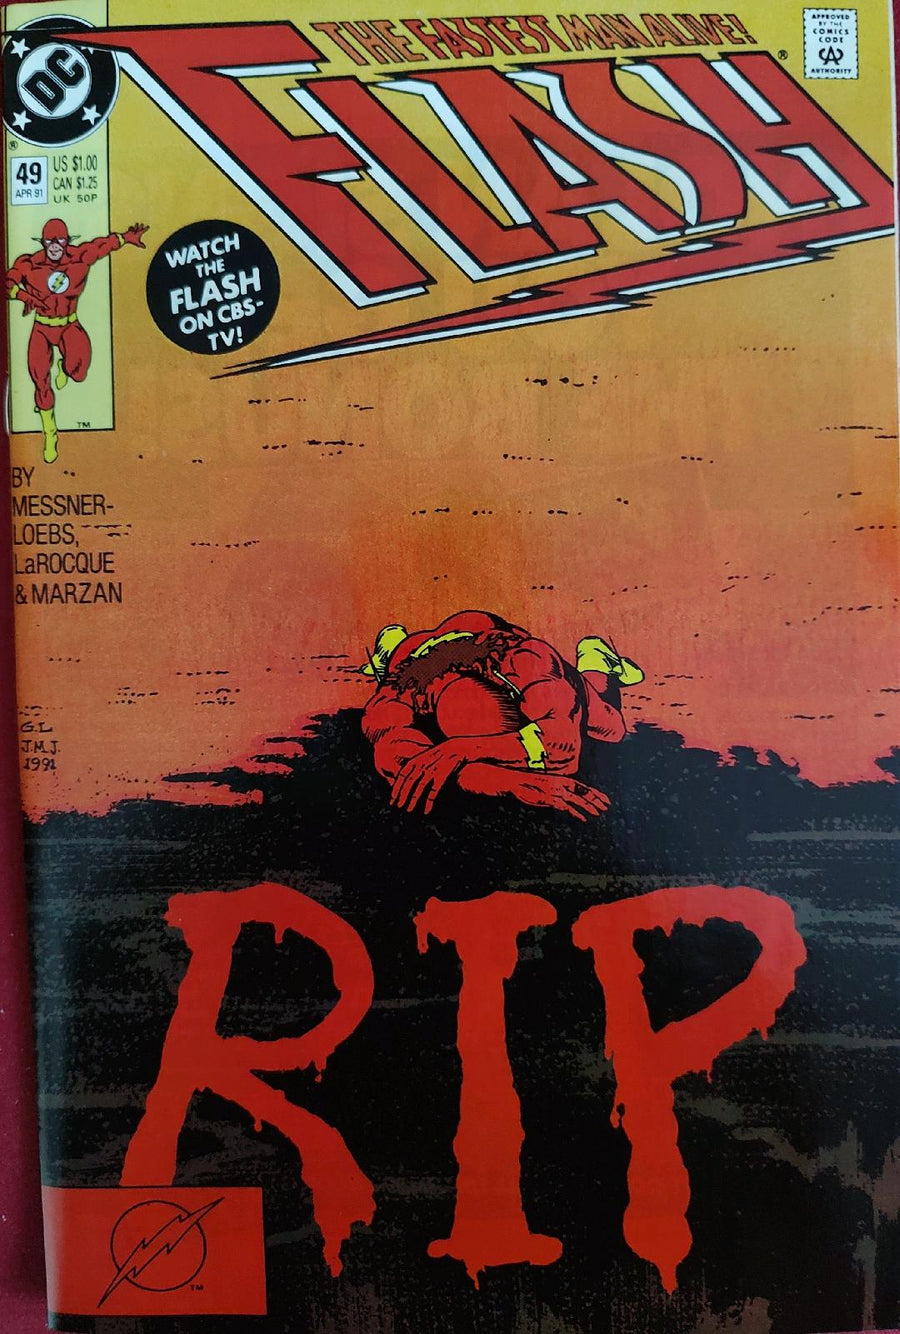 Flash #49 Vol 2 1991 Comic Book Cover